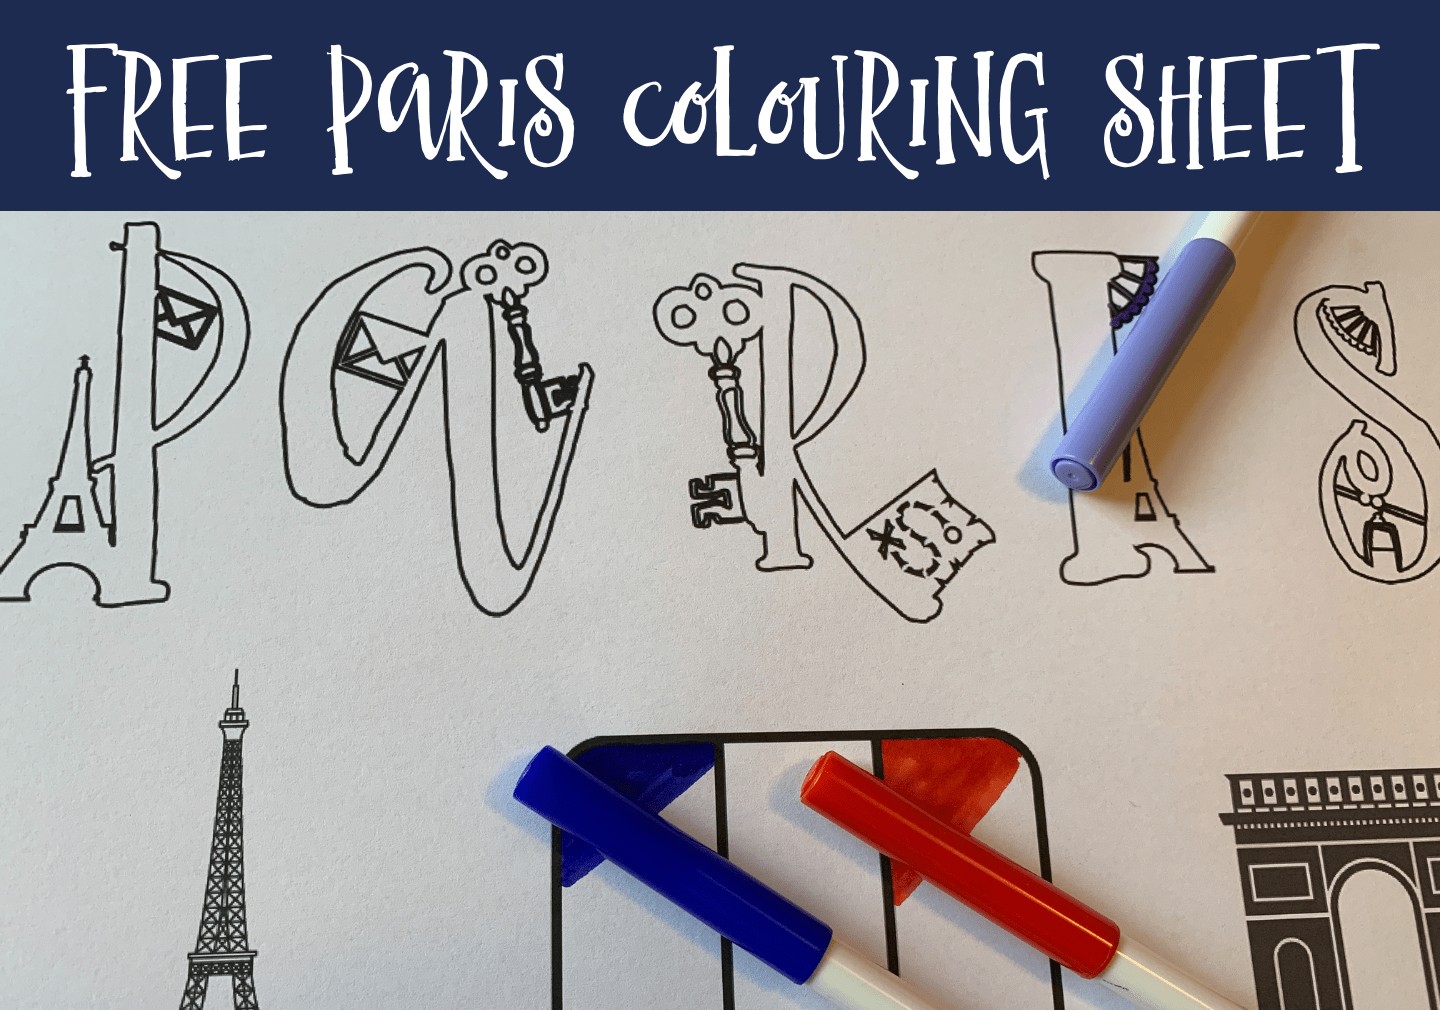 Free Paris Colouring Sheet